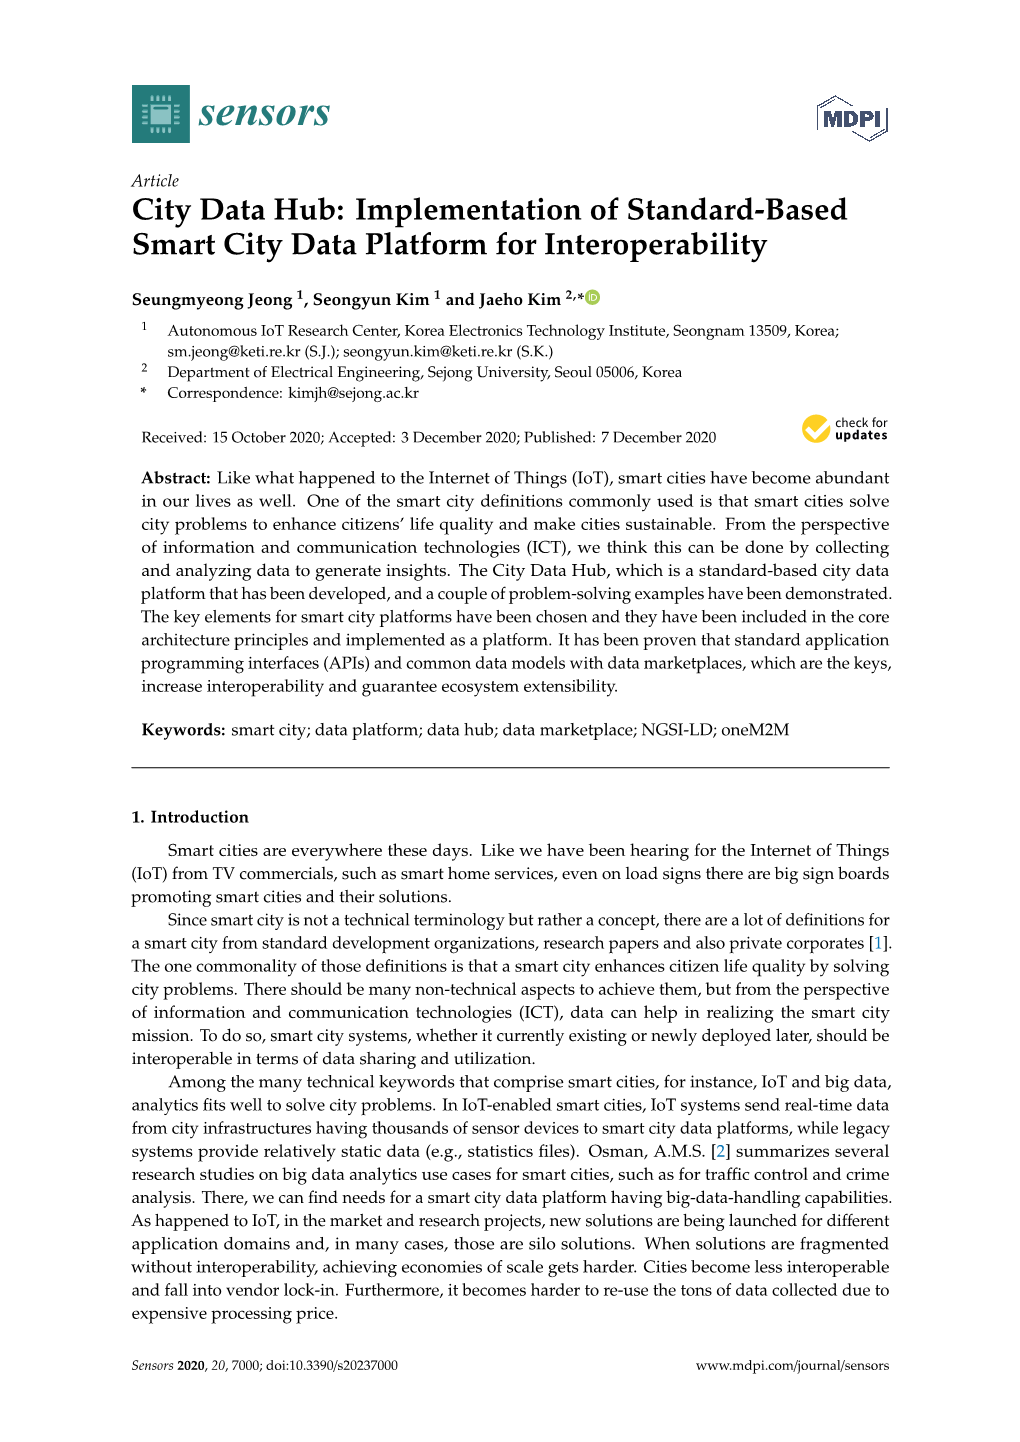 Implementation of Standard-Based Smart City Data Platform for Interoperability